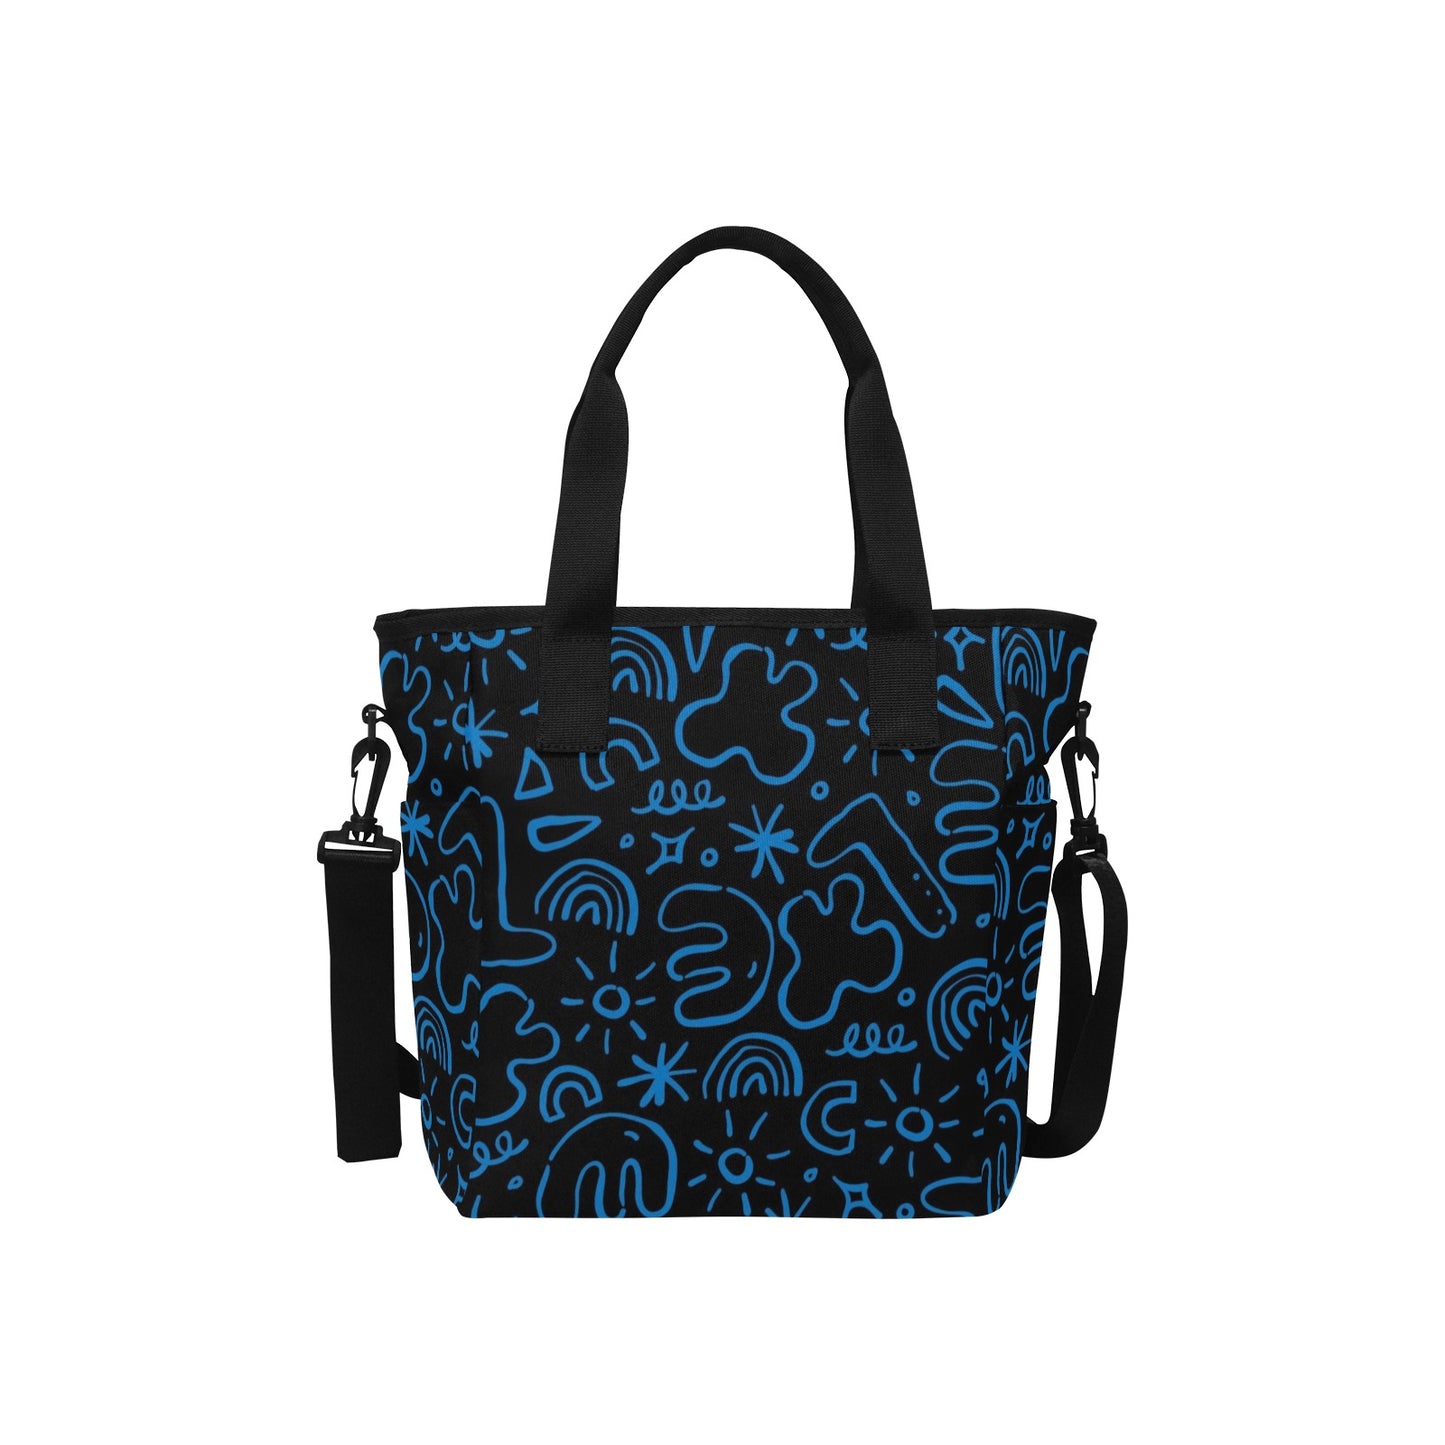 Blue Squiggle - Tote Bag with Shoulder Strap Nylon Tote Bag